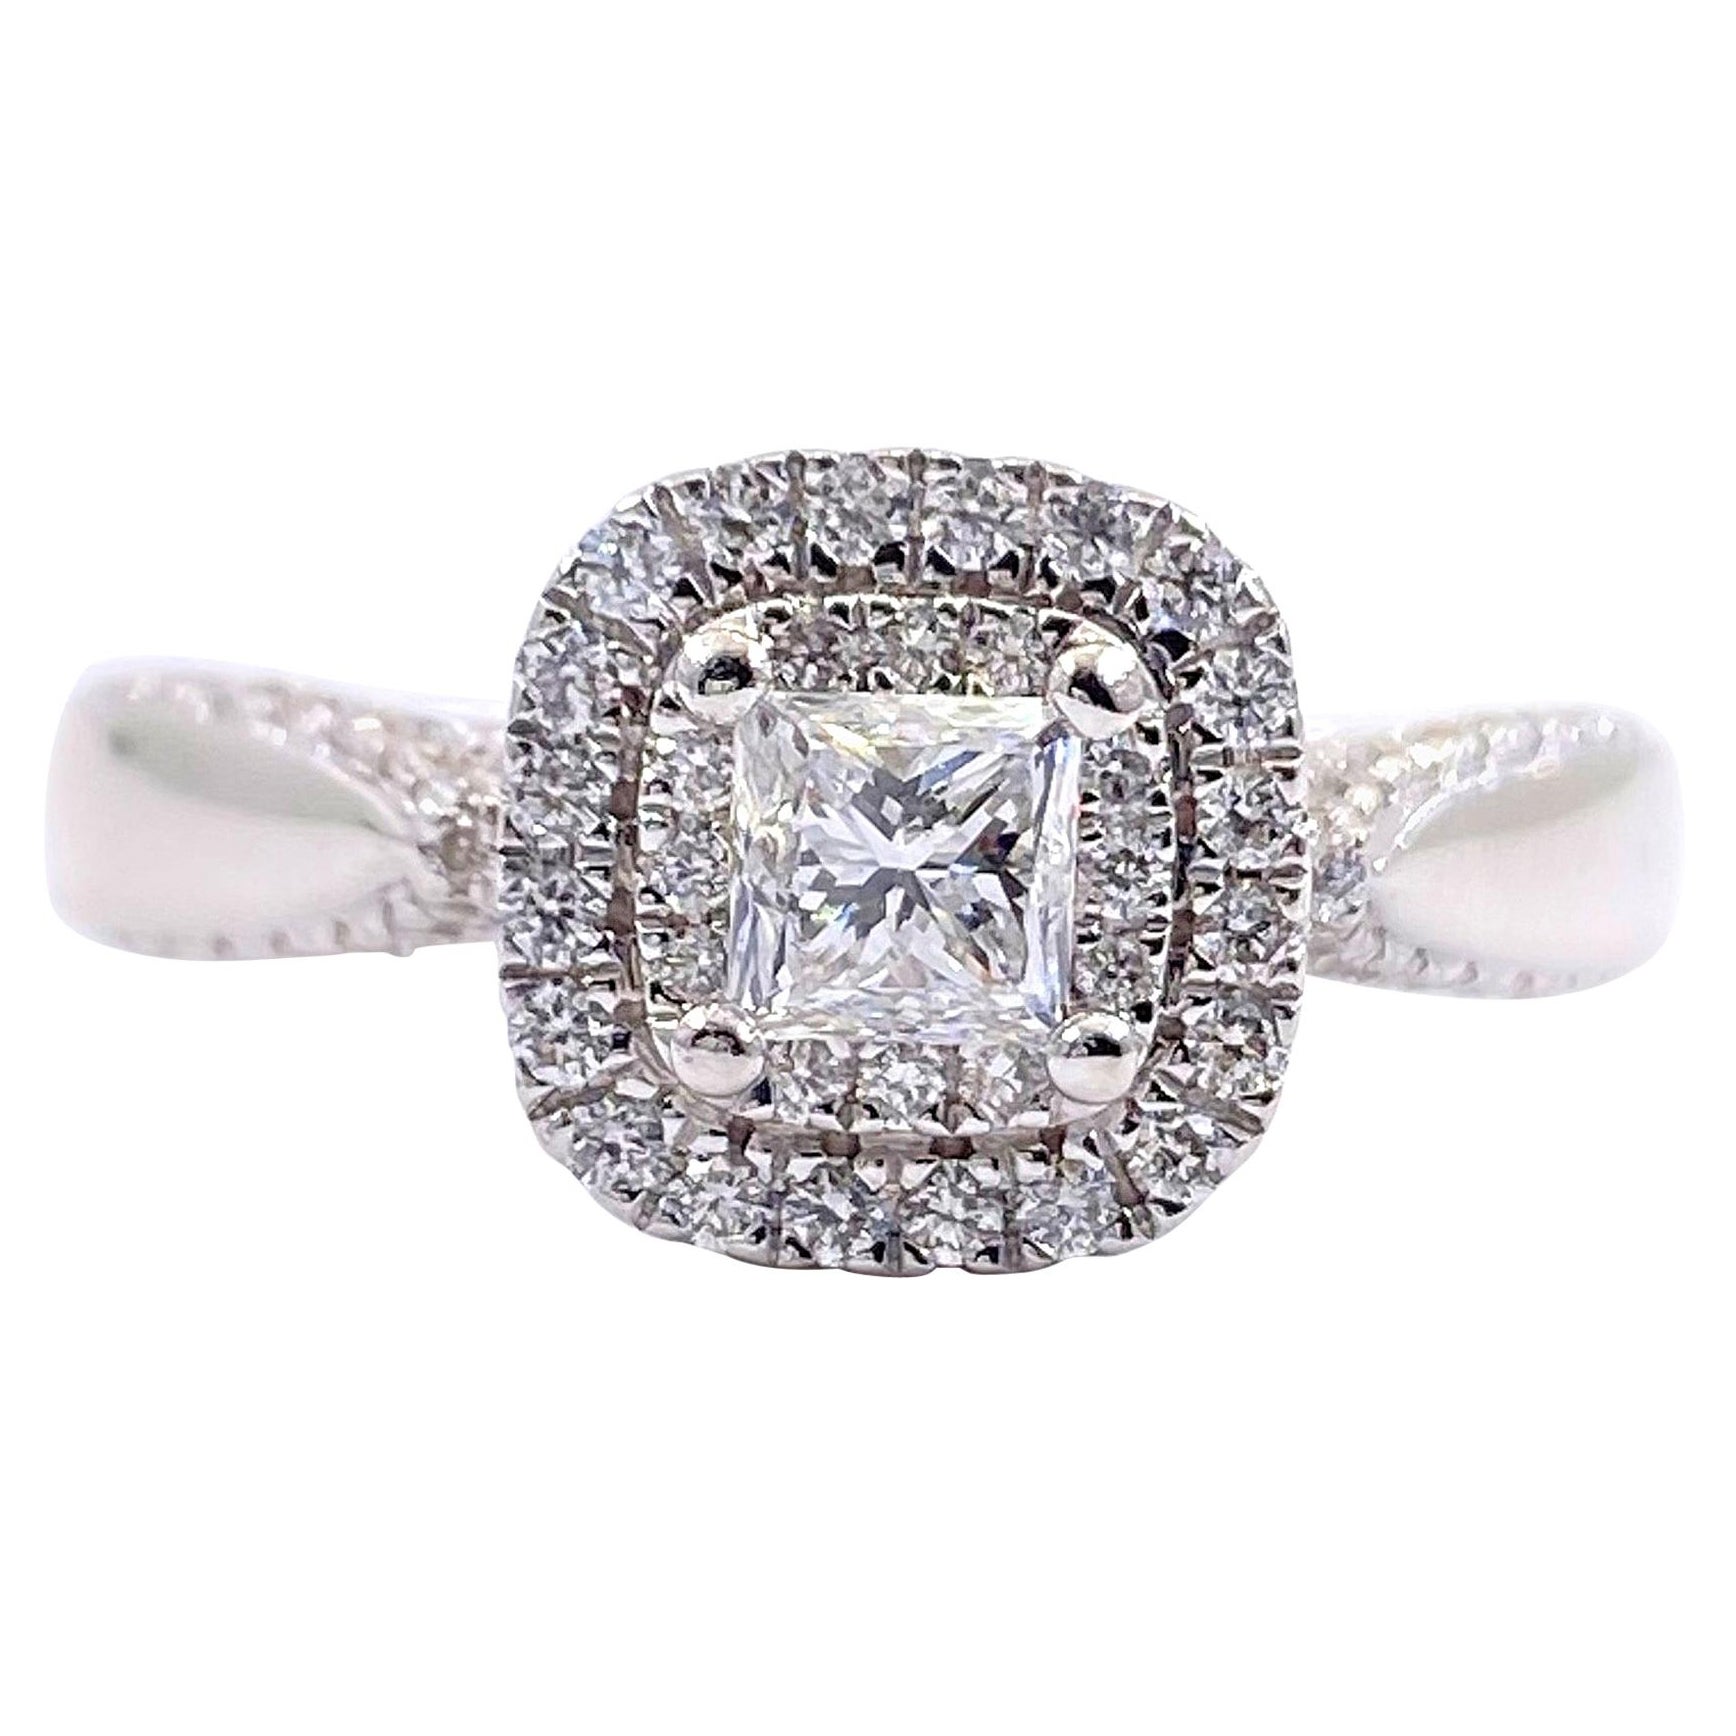 Vera Wang Love Collection 7/8 Carat Princess Diamond Double Frame Ring